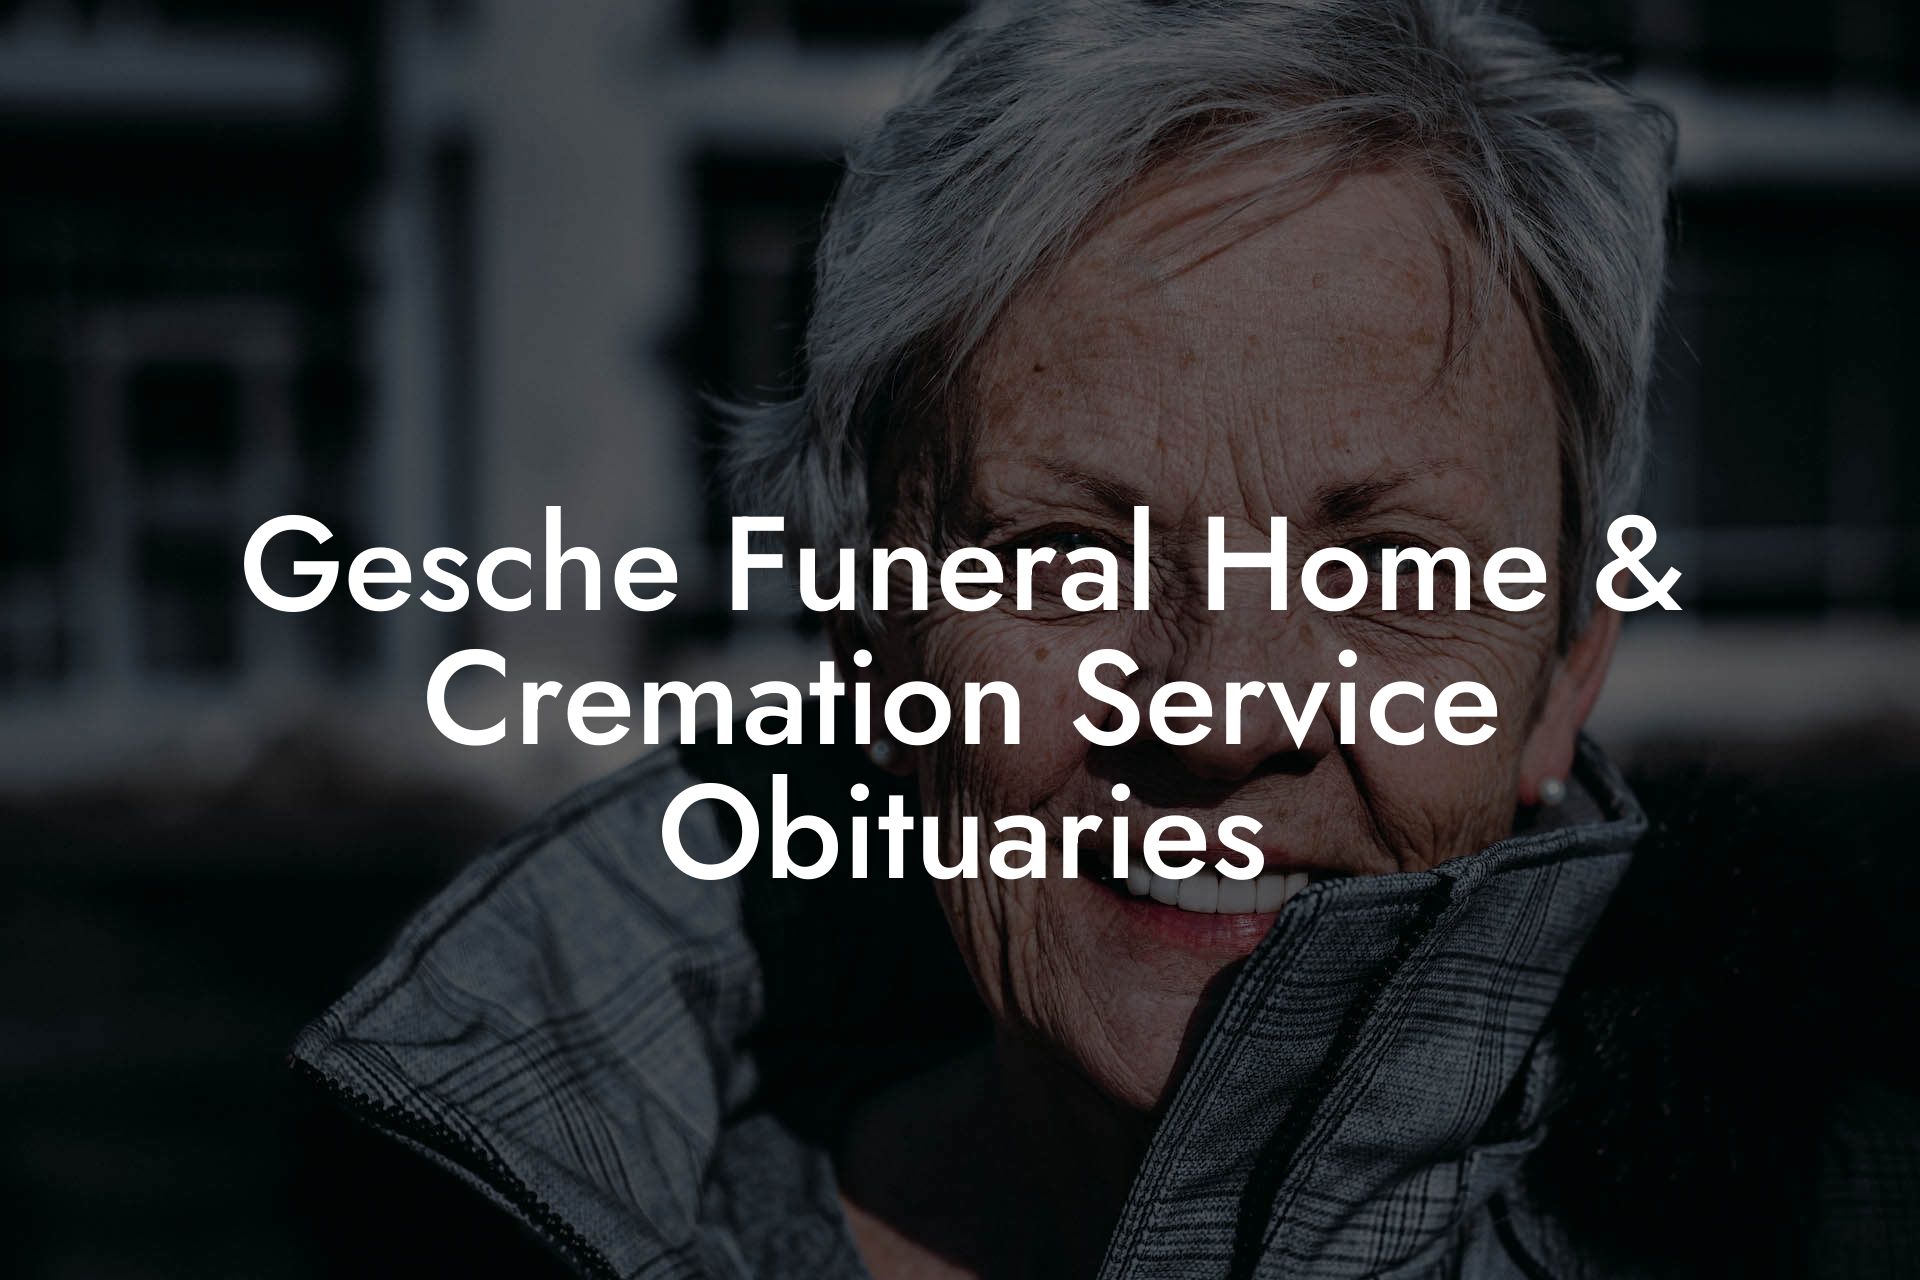 Gesche Funeral Home & Cremation Service Obituaries